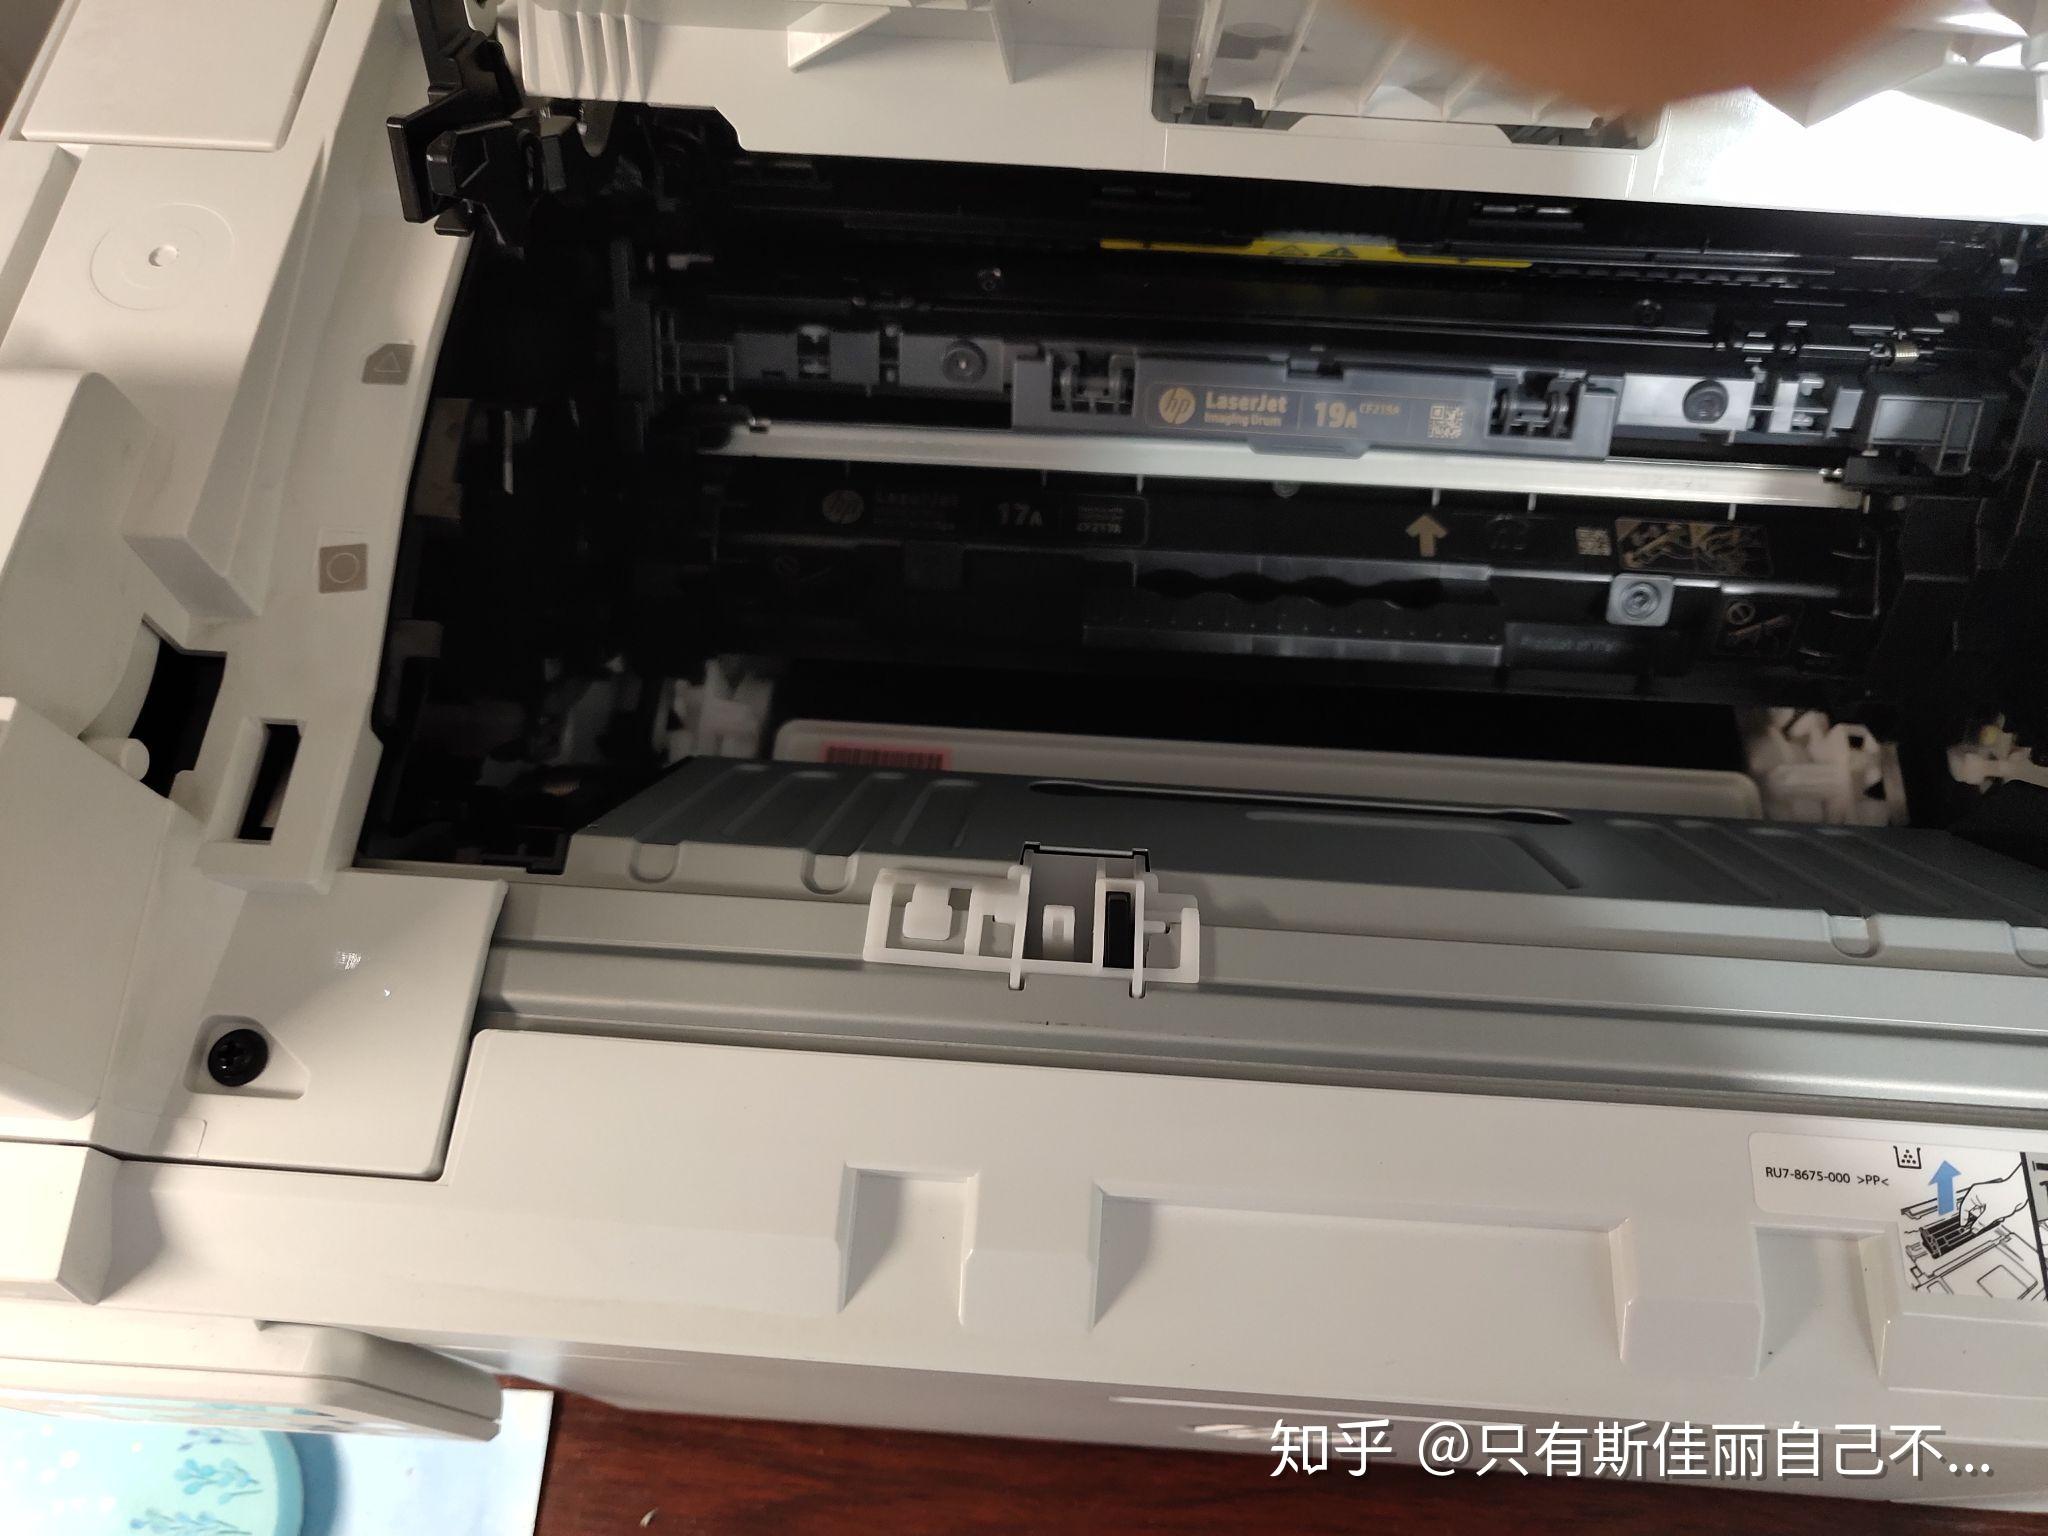 Hp Laserjet Pro 200 Color Printer M251n – Telegraph